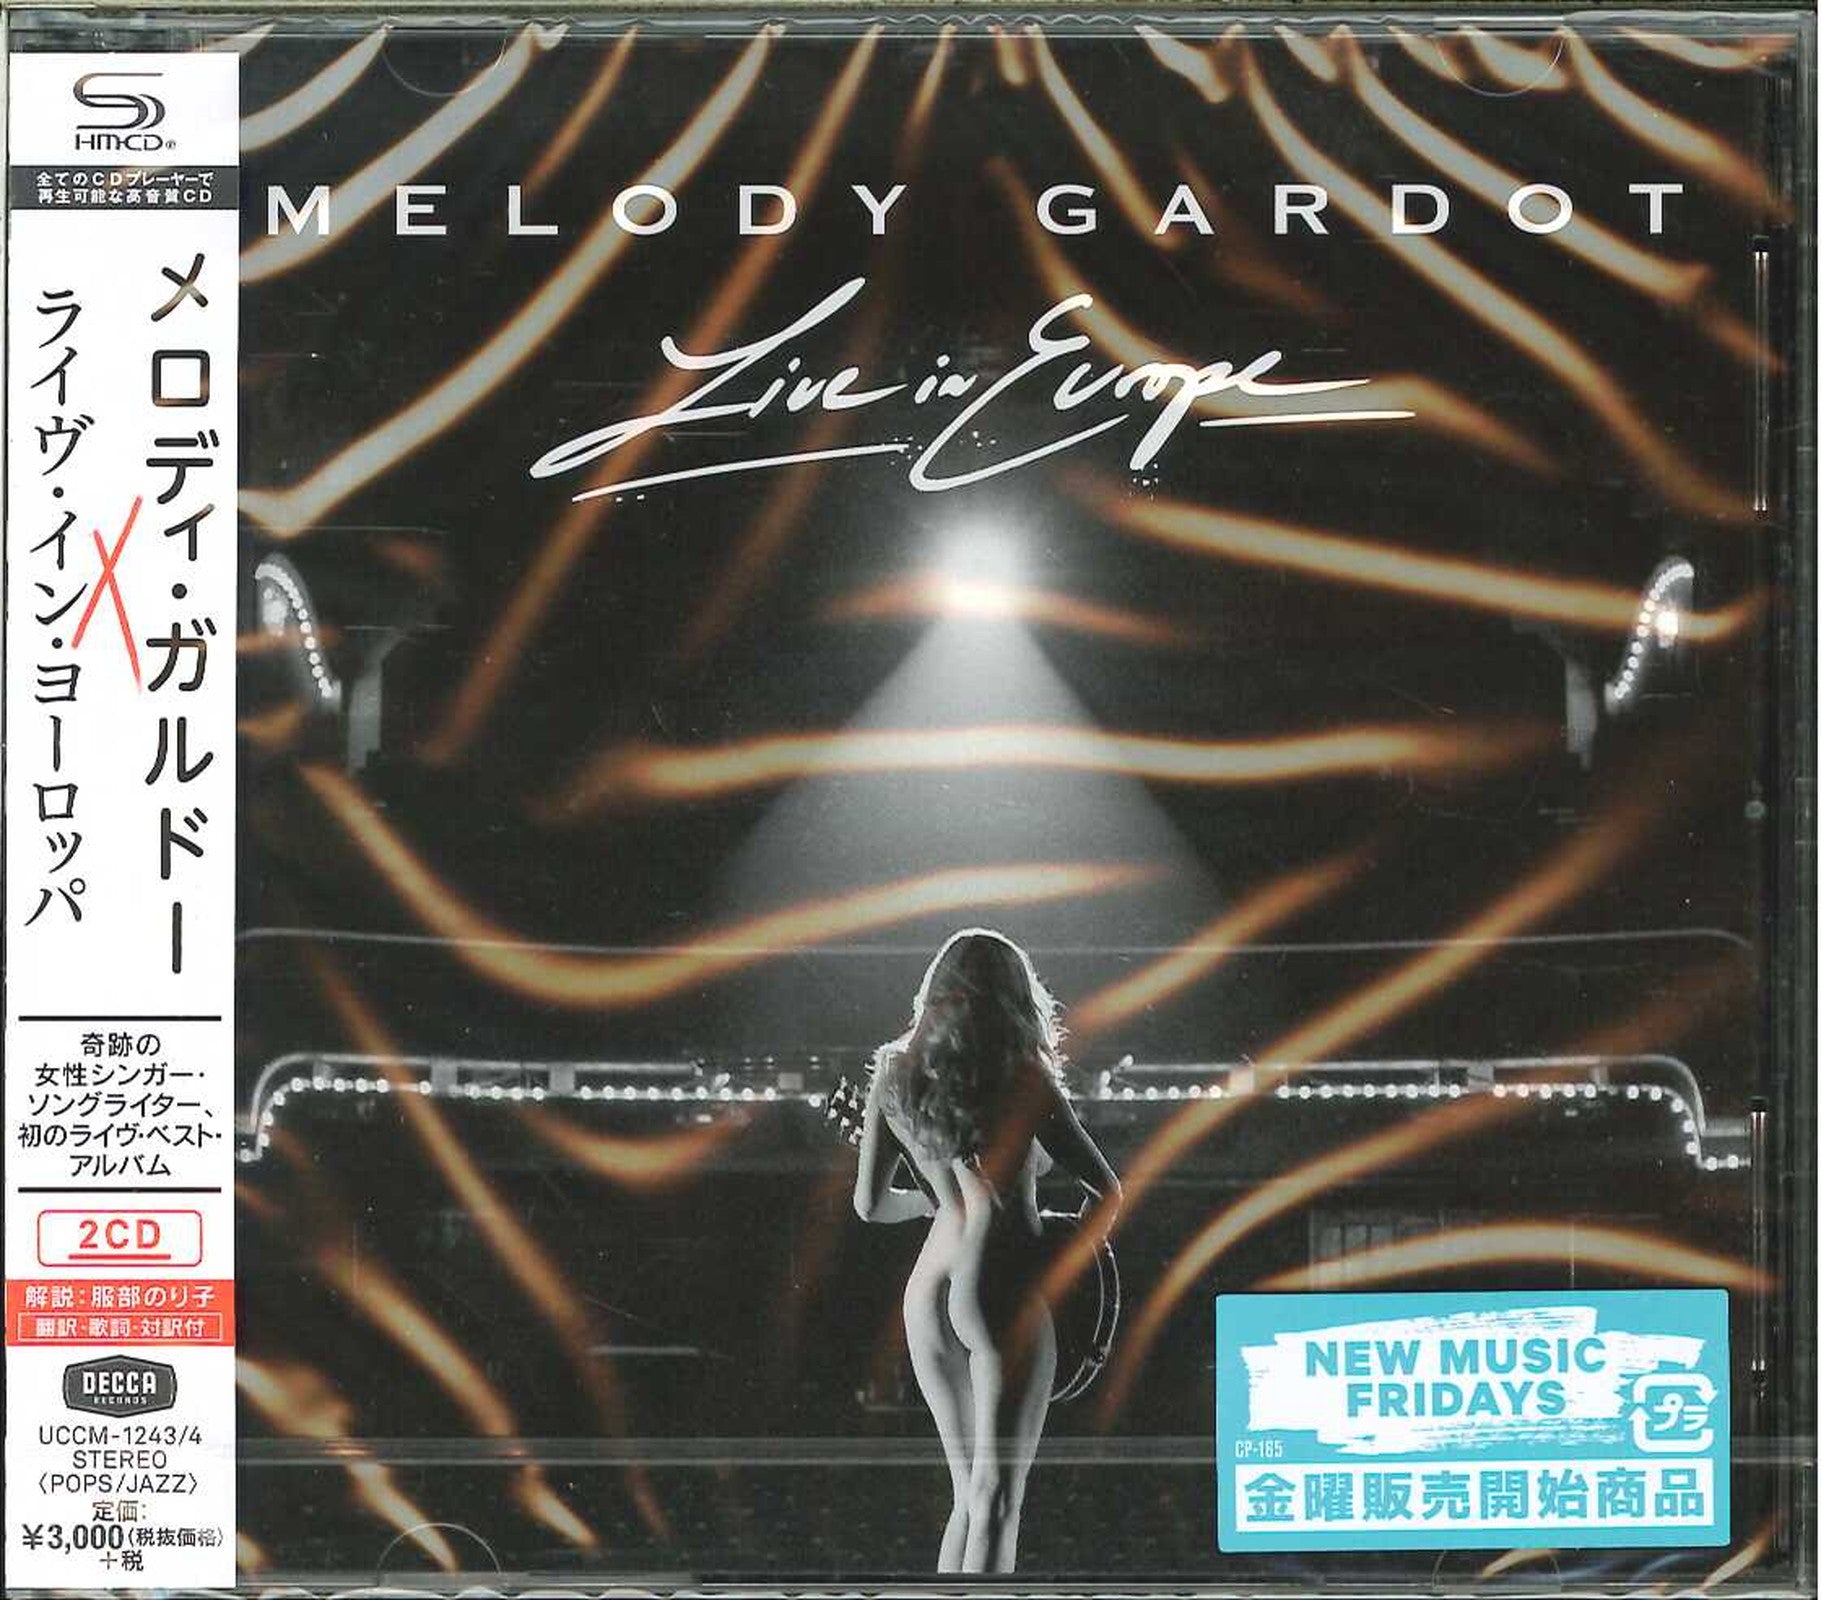 Auckland Villig Utilfreds Melody Gardot - Live In Europe - Japan 2 SHM-CD - CDs Vinyl Japan Store